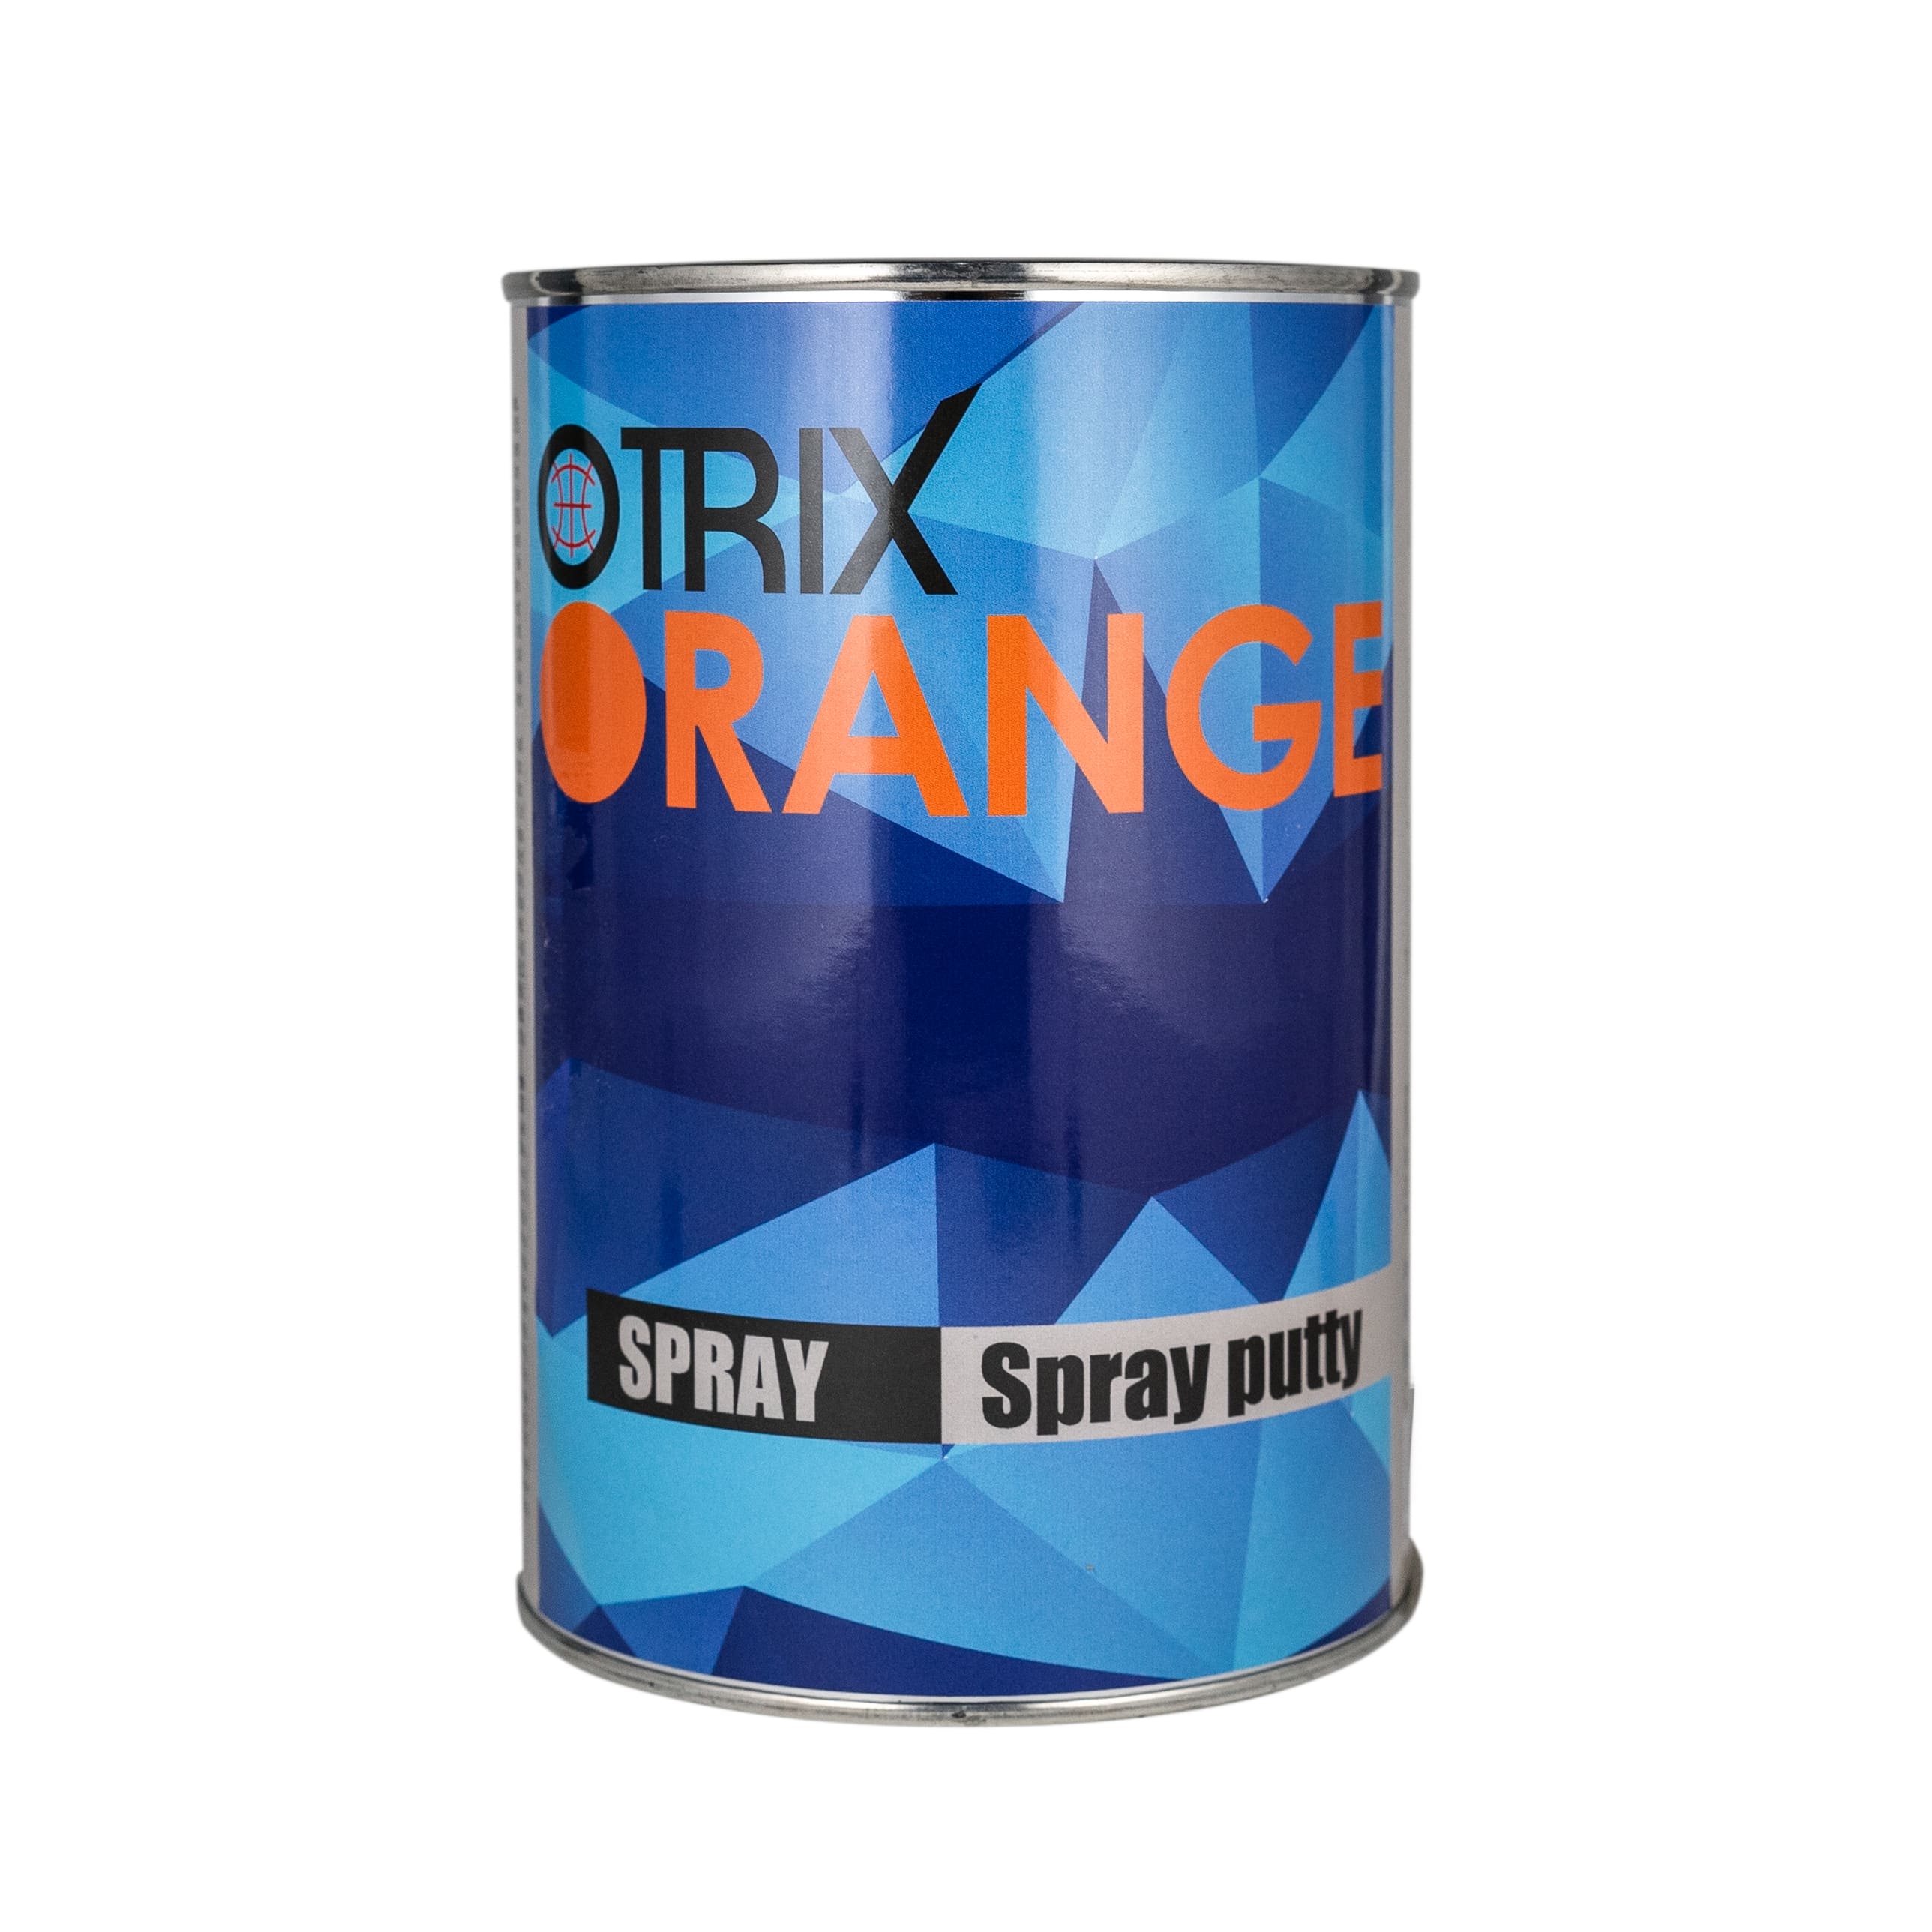 Шпатлевка жидкая ORANGE Spray putti 16 Final (OTRIX) 1,2кг